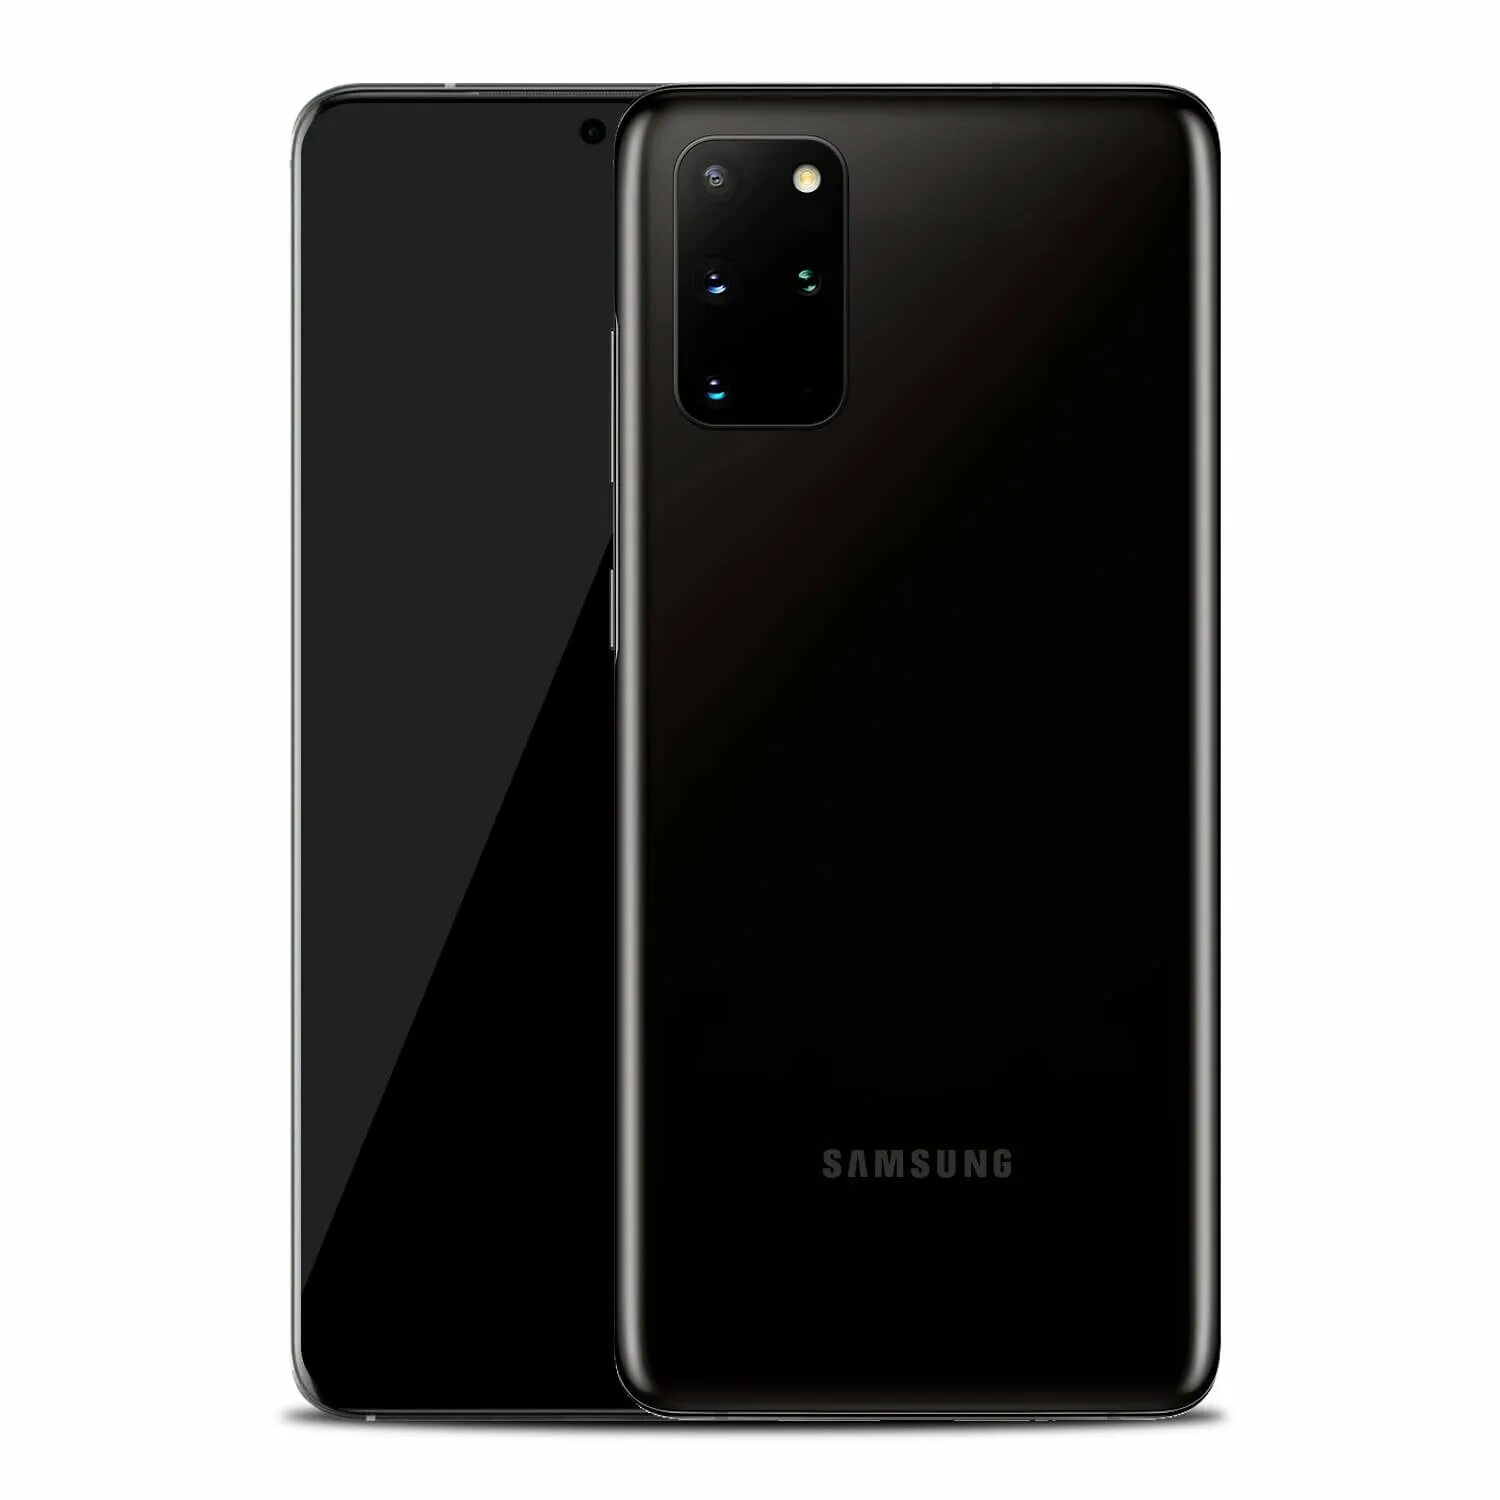 П л с 20. Samsung s20 Plus. Samsung Galaxy s20 Plus черный. Samsung Galaxy s20 Plus 128gb. Samsung Galaxy s20 Black.